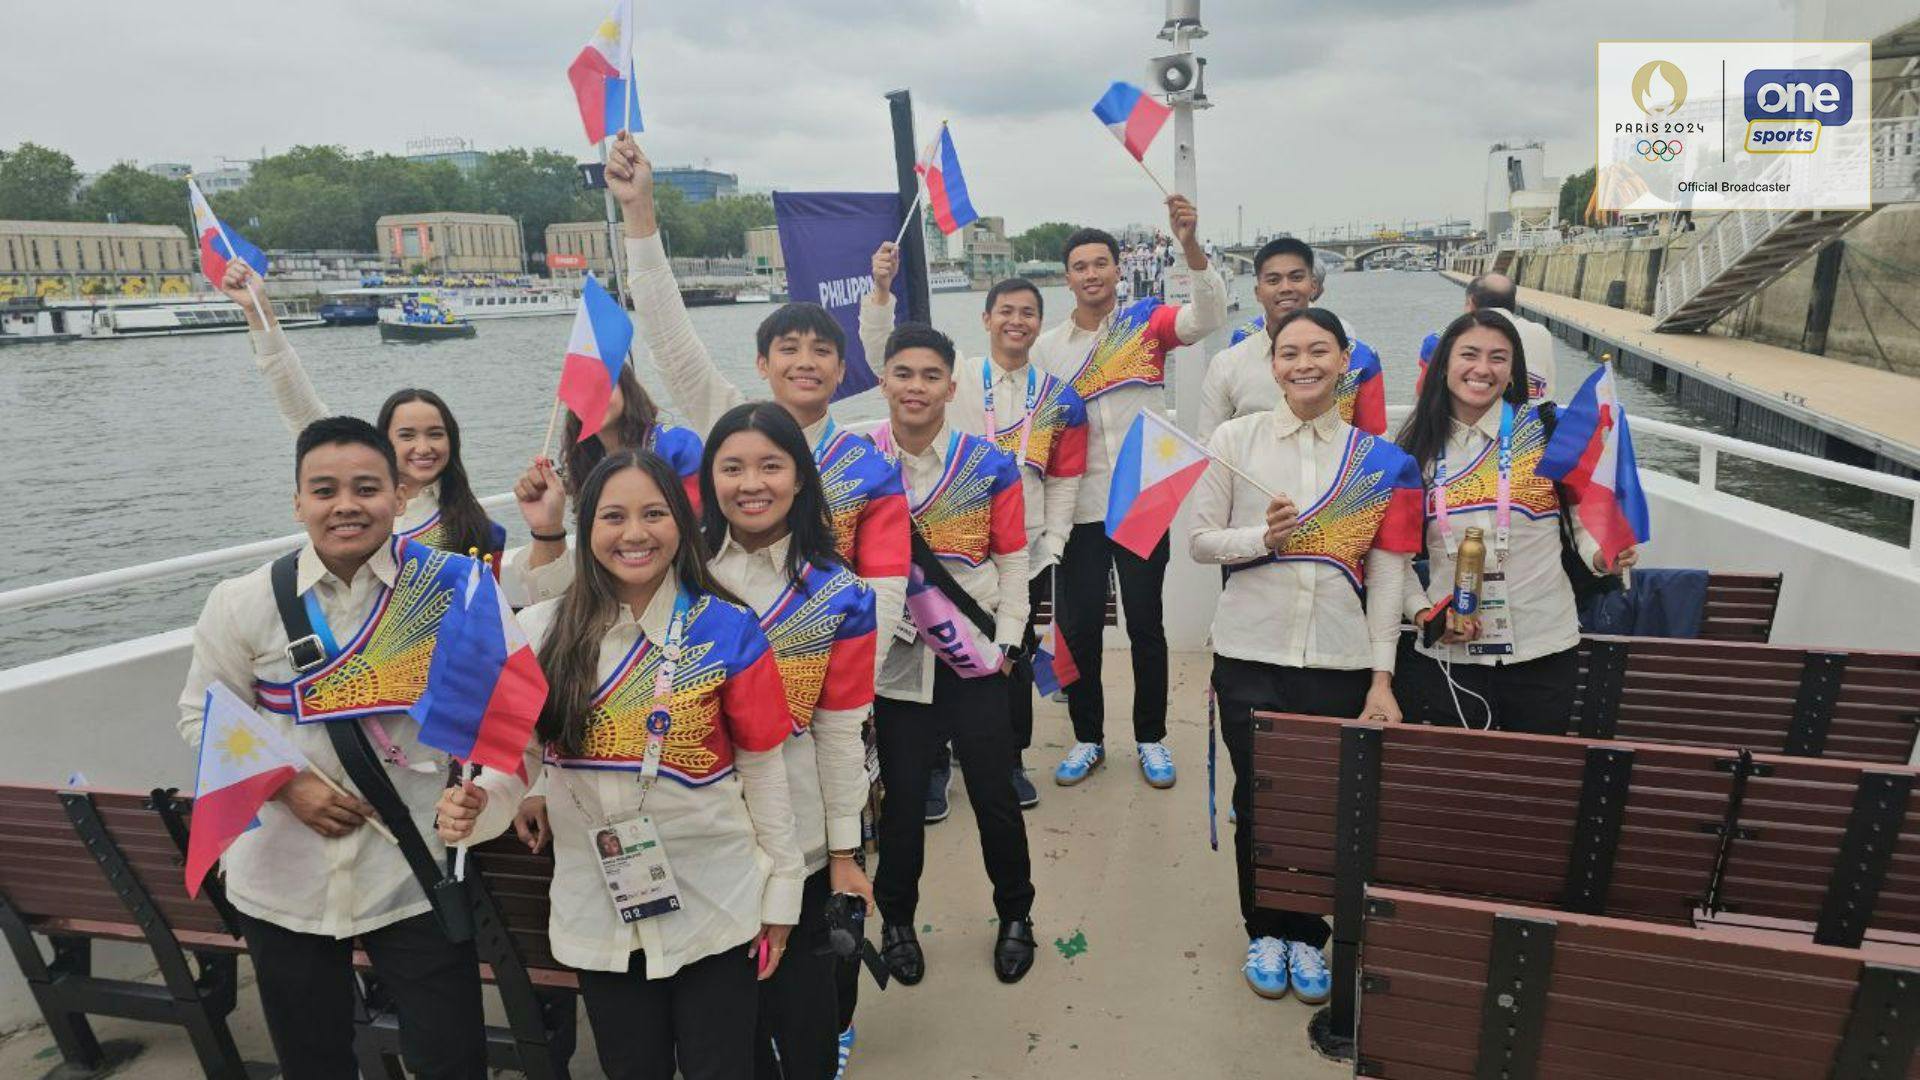 Para sa Bayan: Team Philippines beams with pride during Paris 2024 opening ceremony